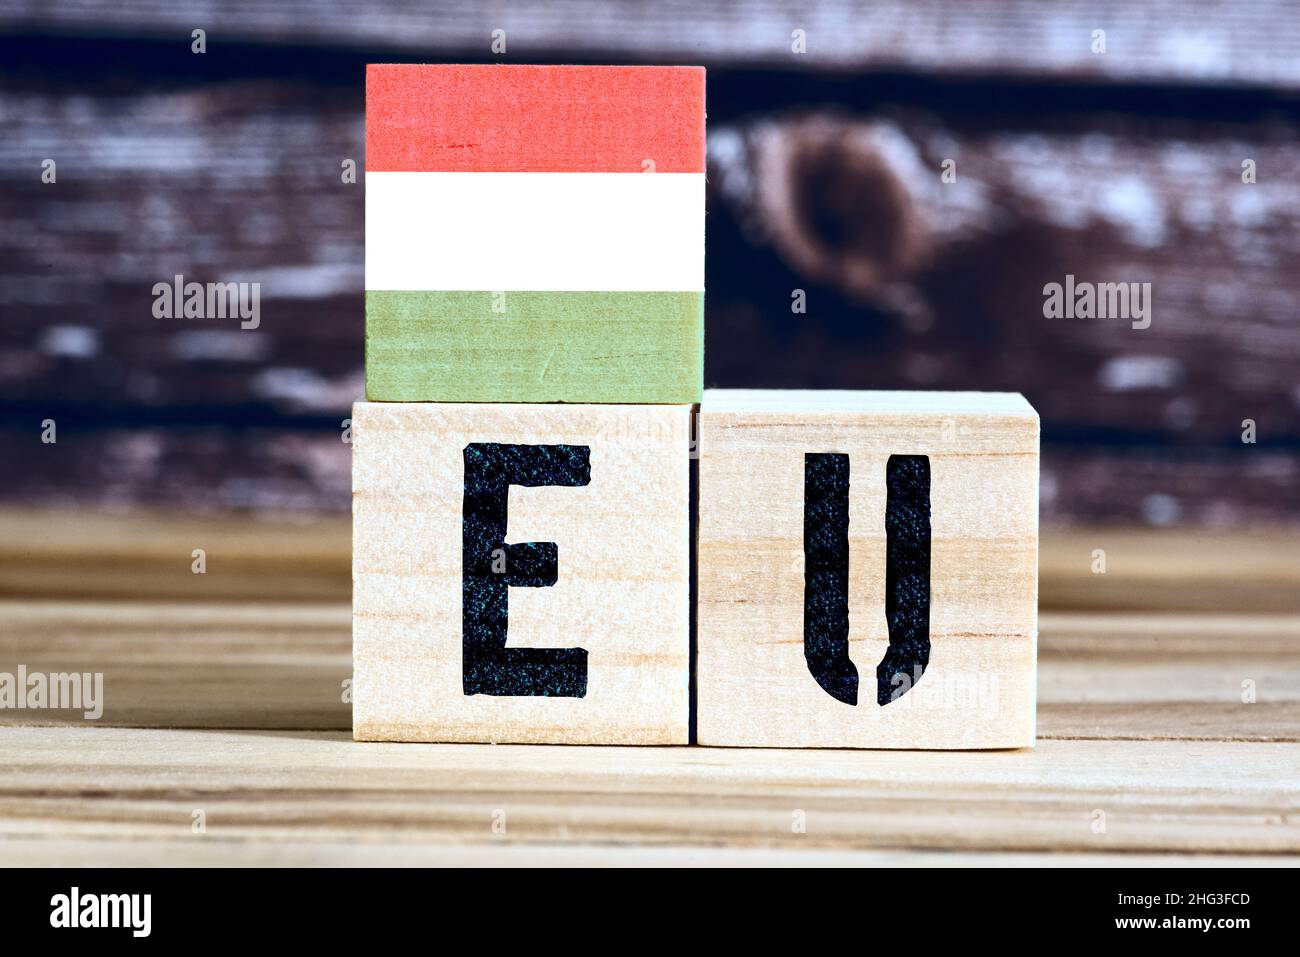 Hungary and the European Union Stock Photo